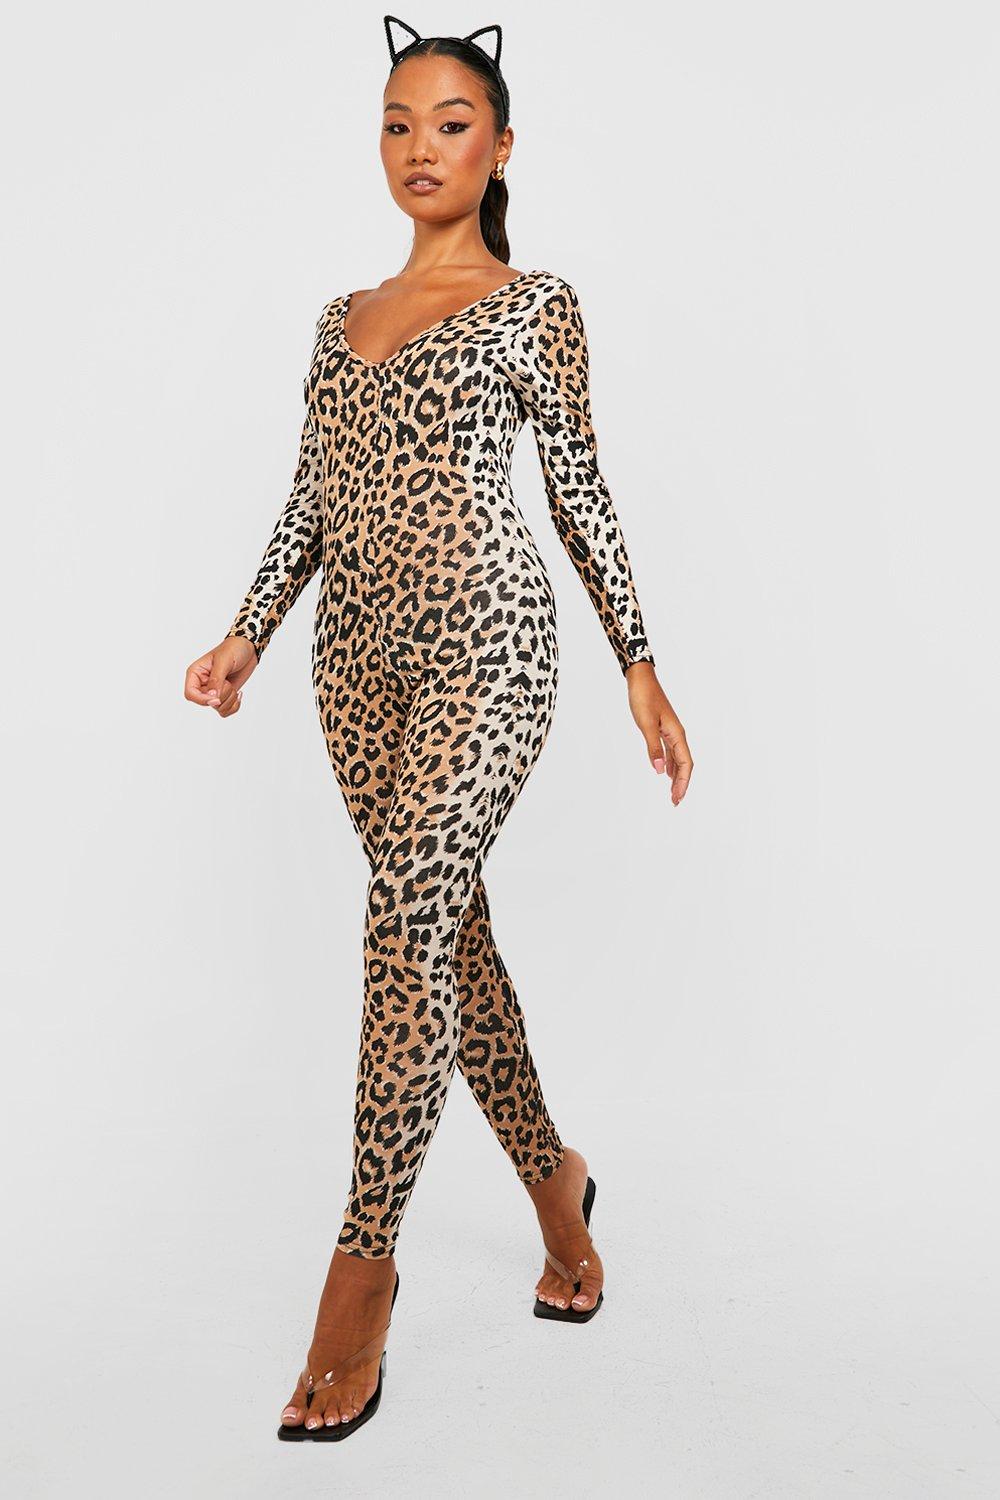 Leopard Full Body Suit Leggings Fitted Jumpsuit For Women - Buy